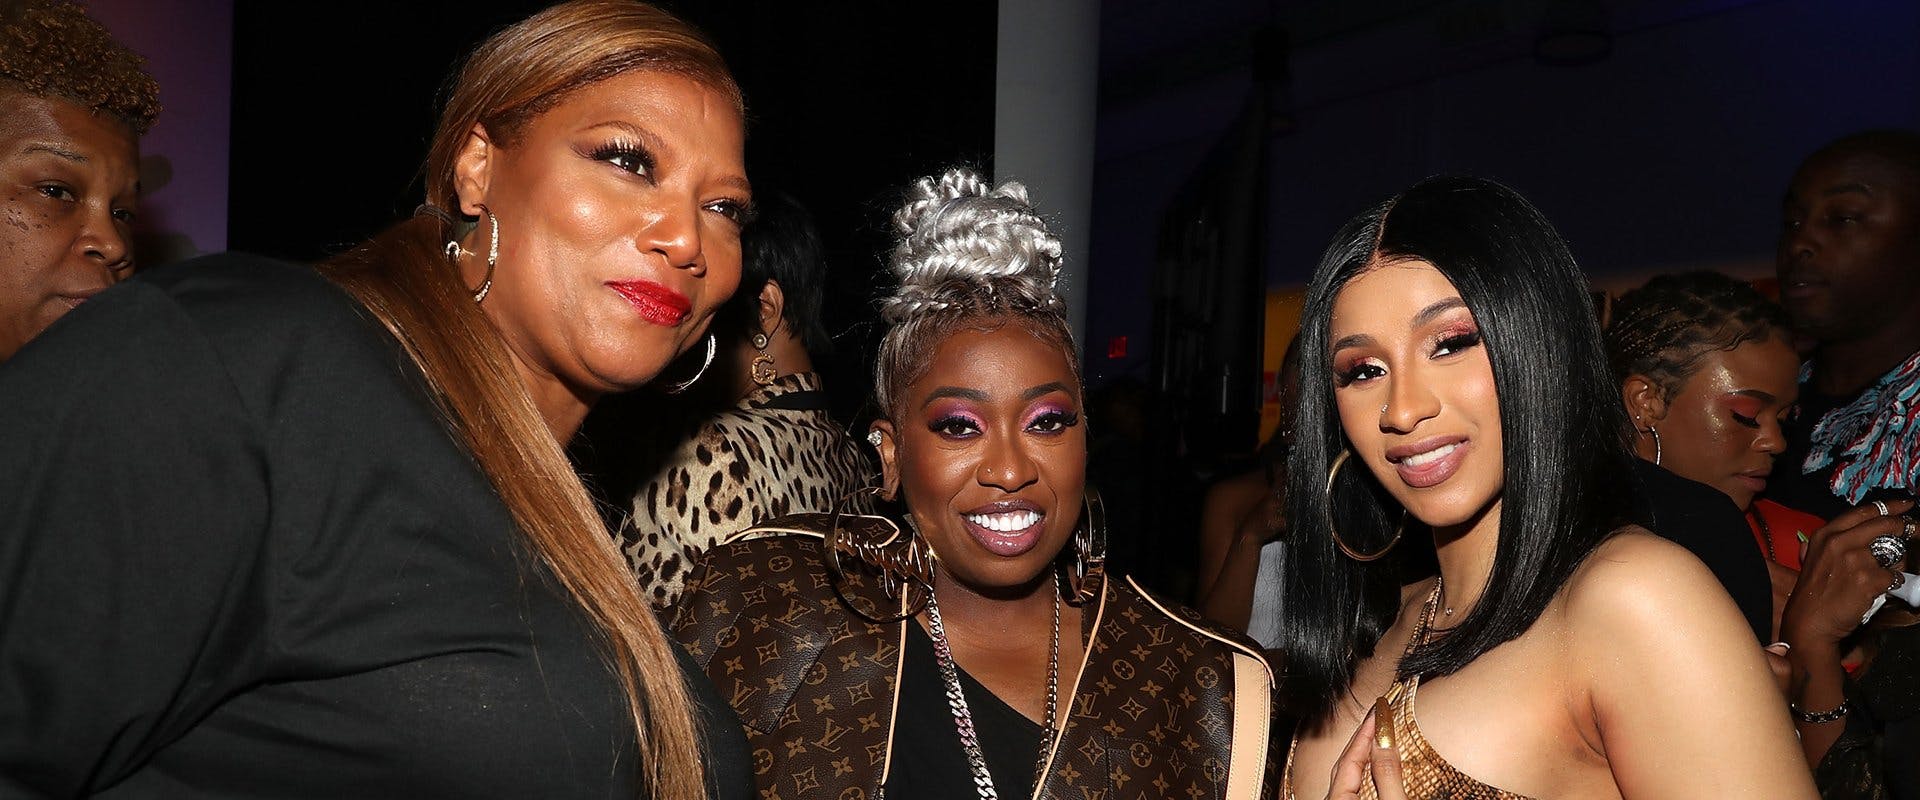 MIssy, Queen Latifa and Nicki Minaj